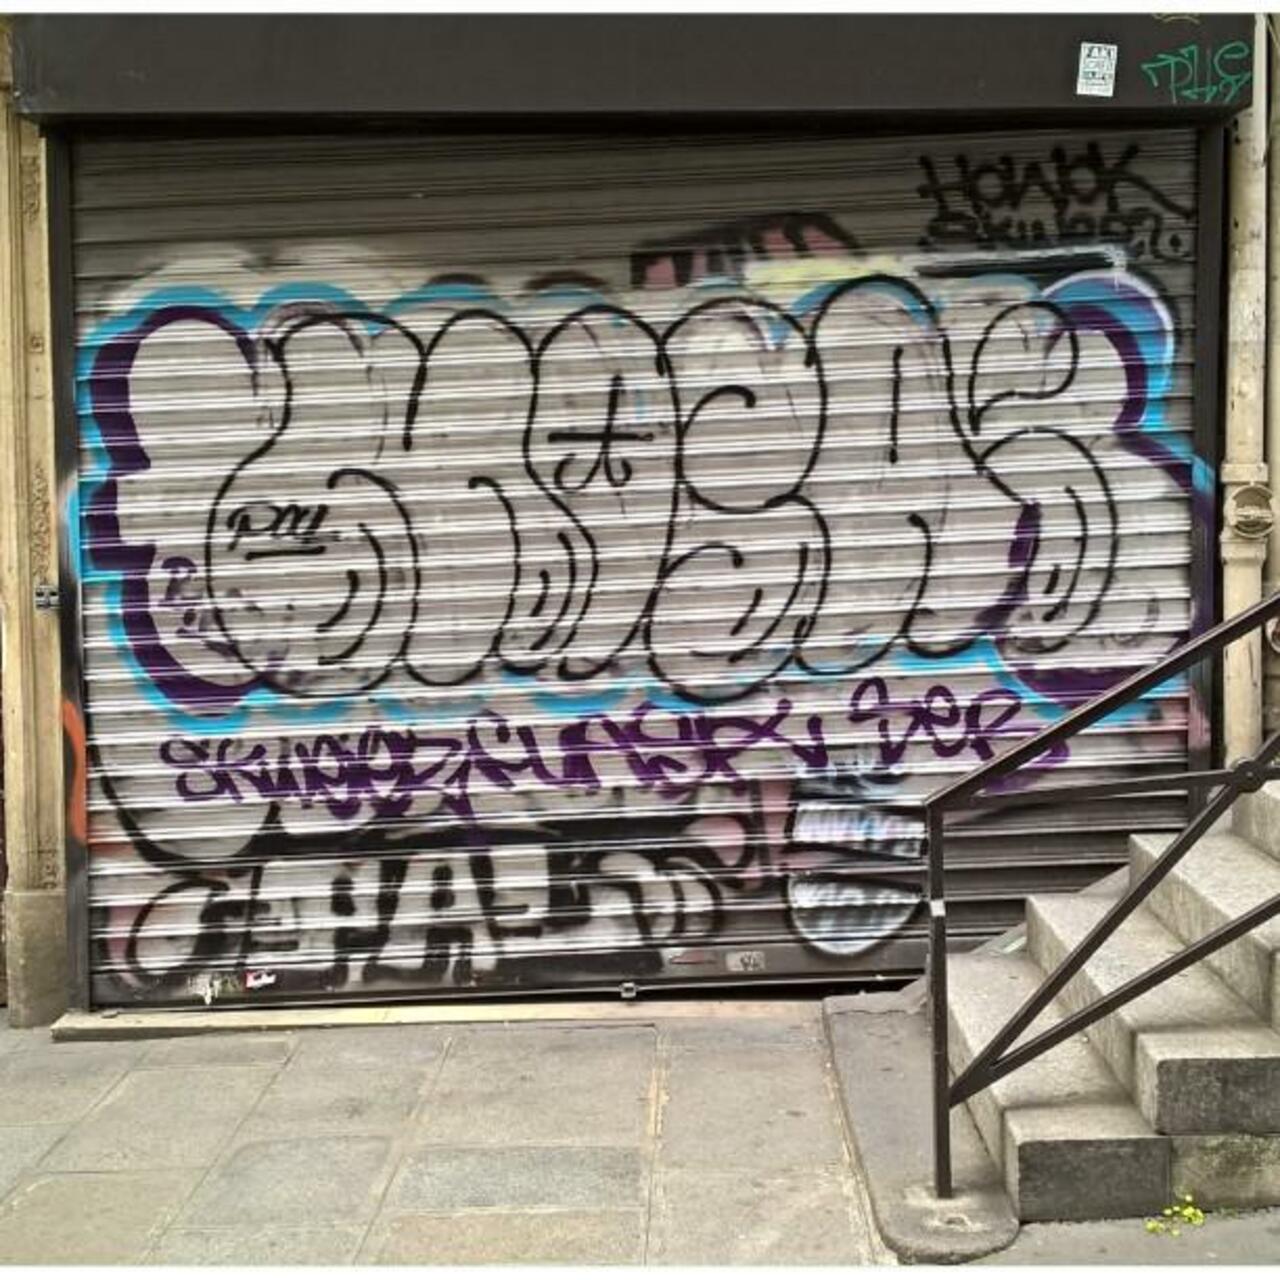 #Paris #graffiti photo by @maxdimontemarciano http://ift.tt/1GgjtiQ #StreetArt http://t.co/ngb4YHjrWk